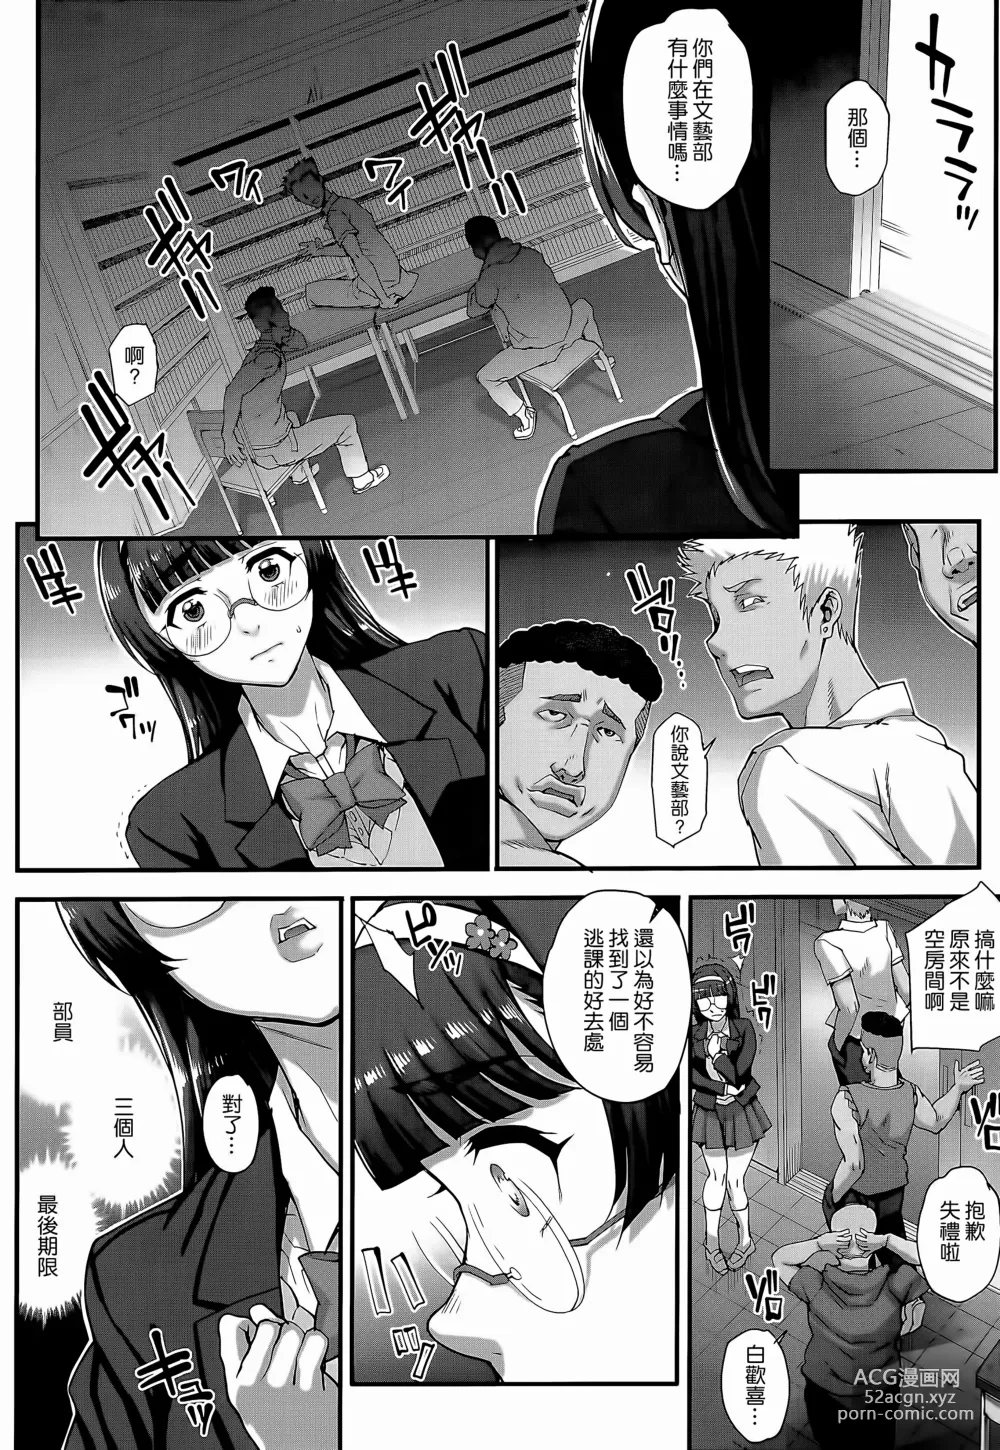 Page 27 of manga Aoharu Snatch - Santch a youth time